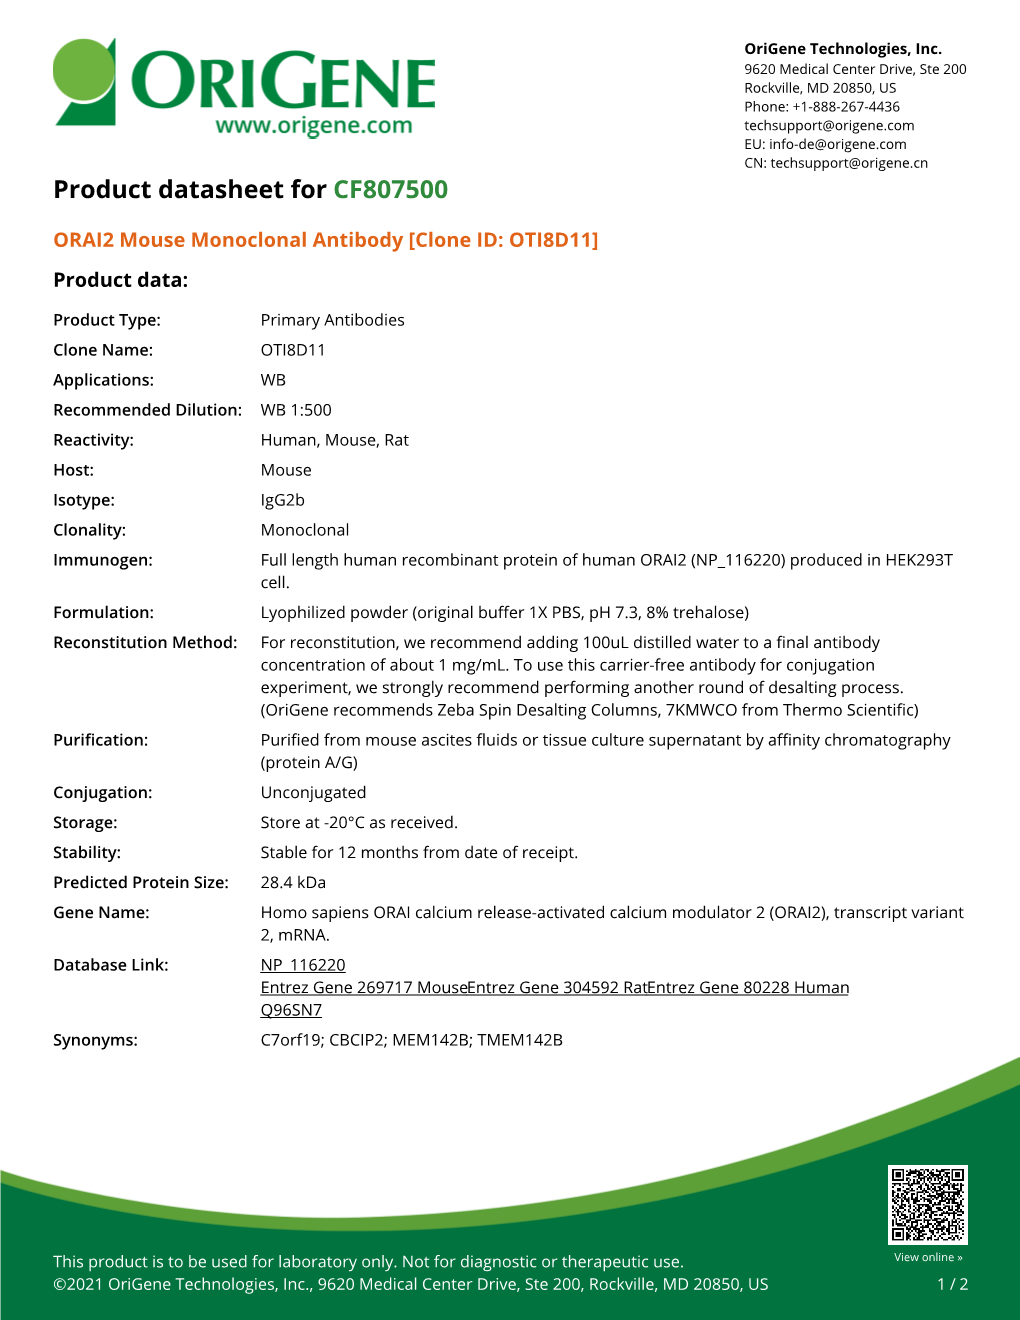 ORAI2 Mouse Monoclonal Antibody [Clone ID: OTI8D11] Product Data